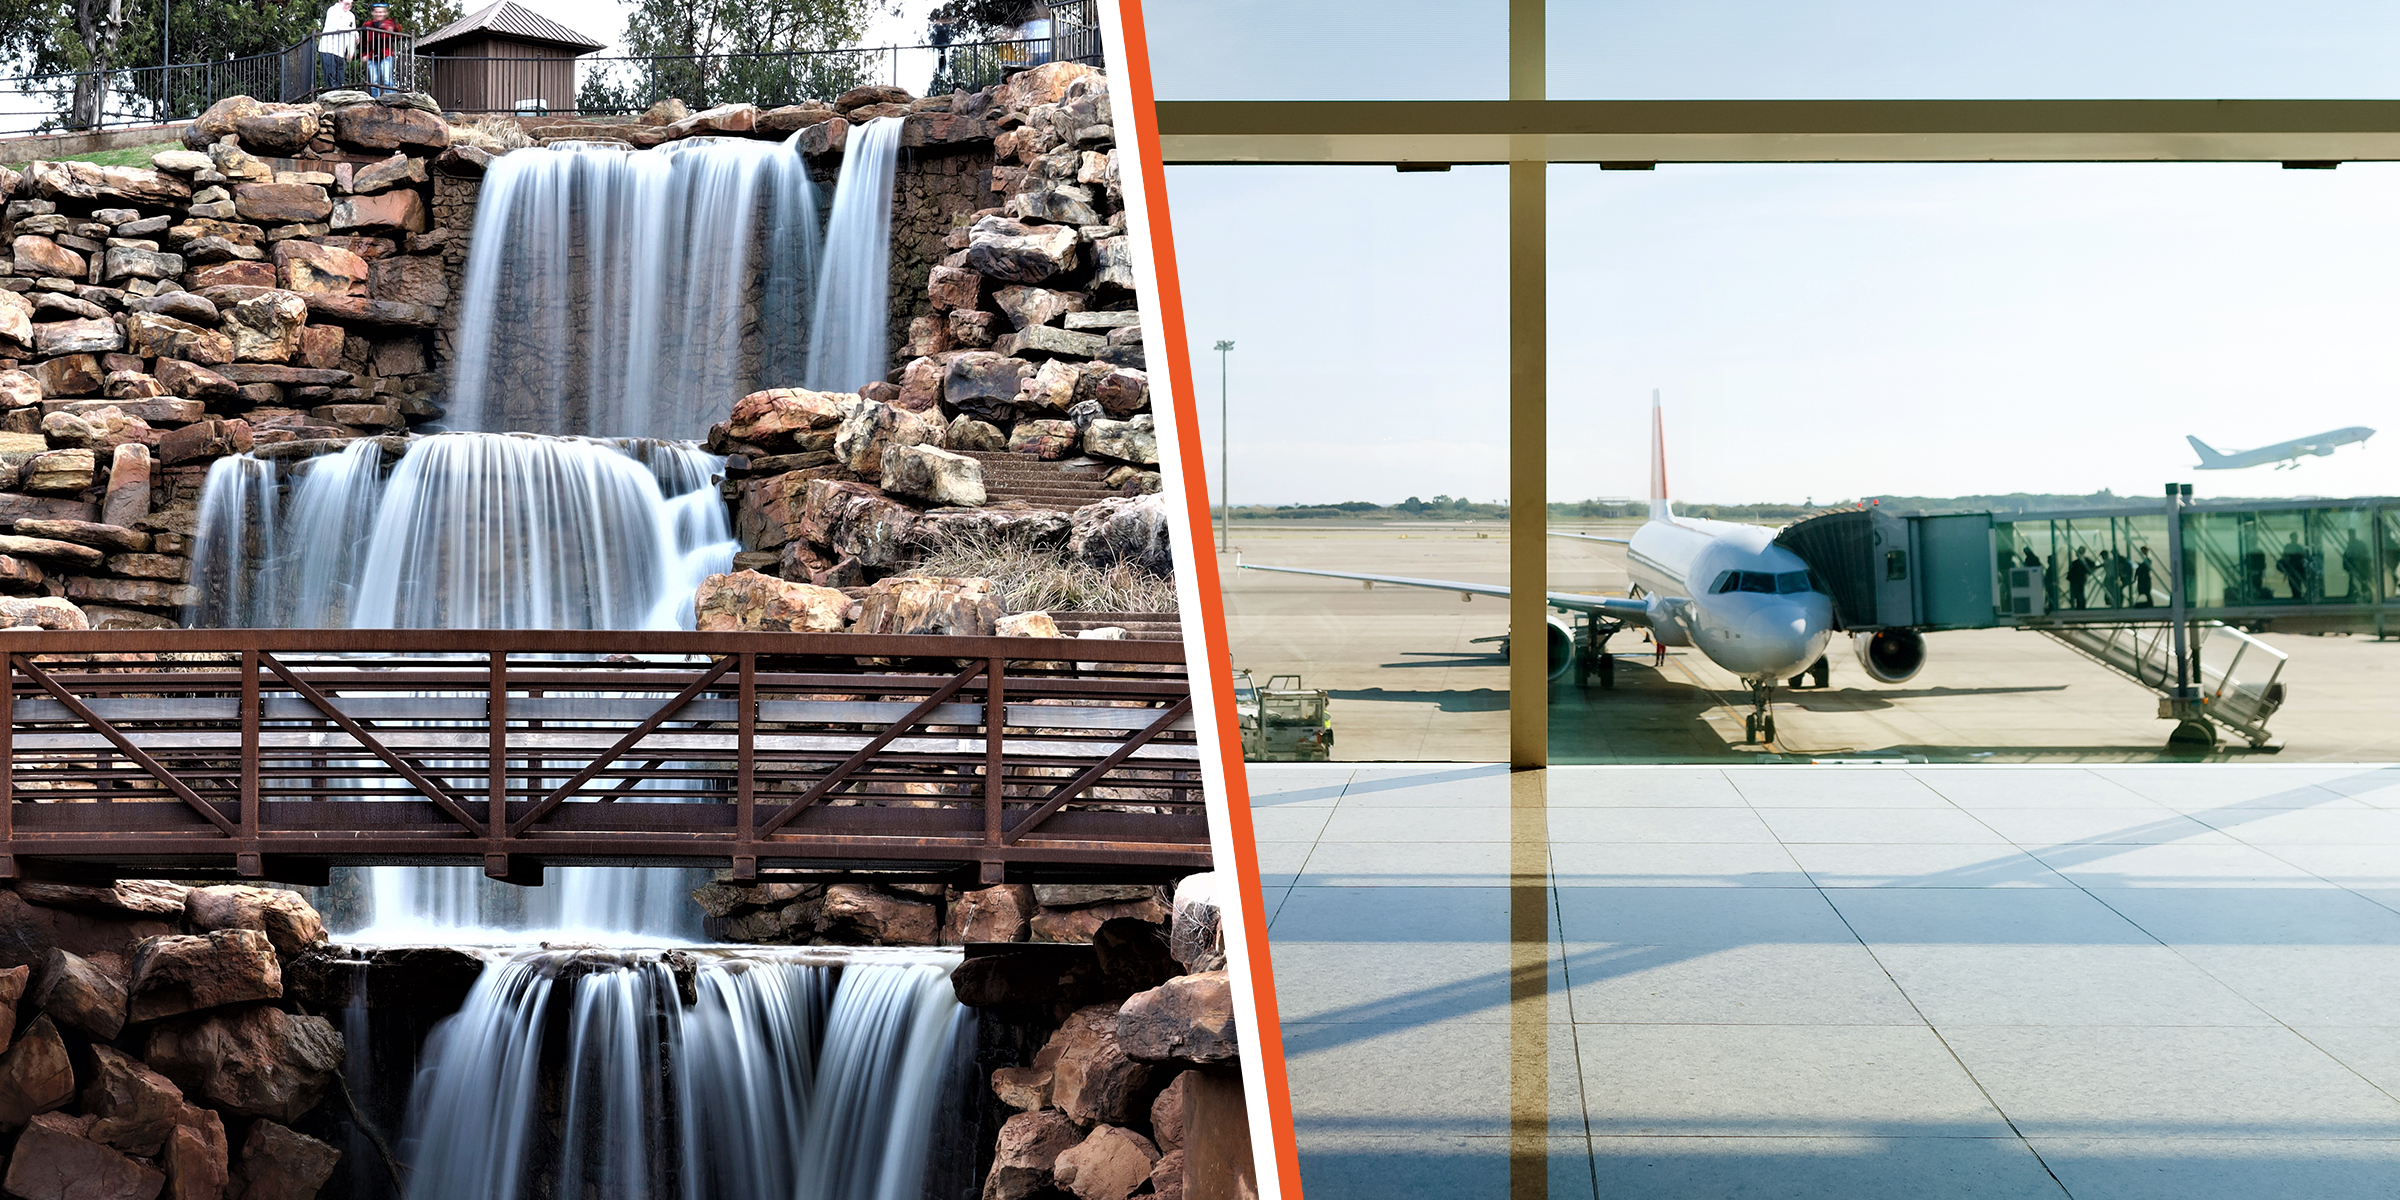 Wichita Falls | An airplane | Source: Shutterstock